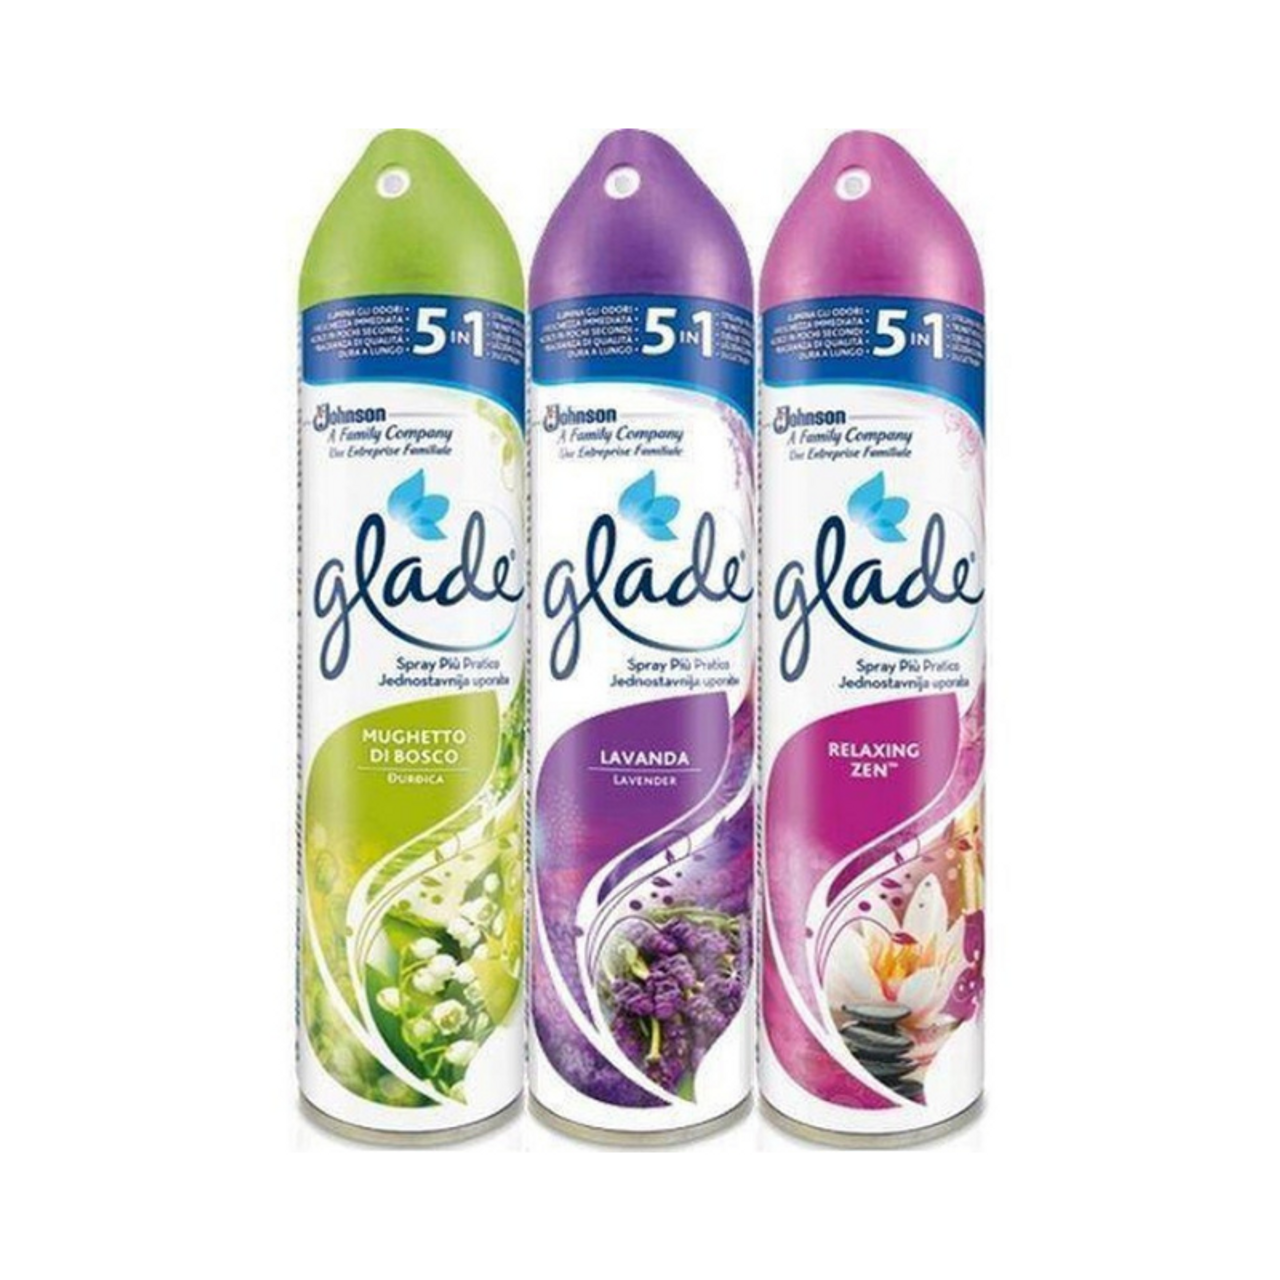 Image of Spray Glade(R) 300ml